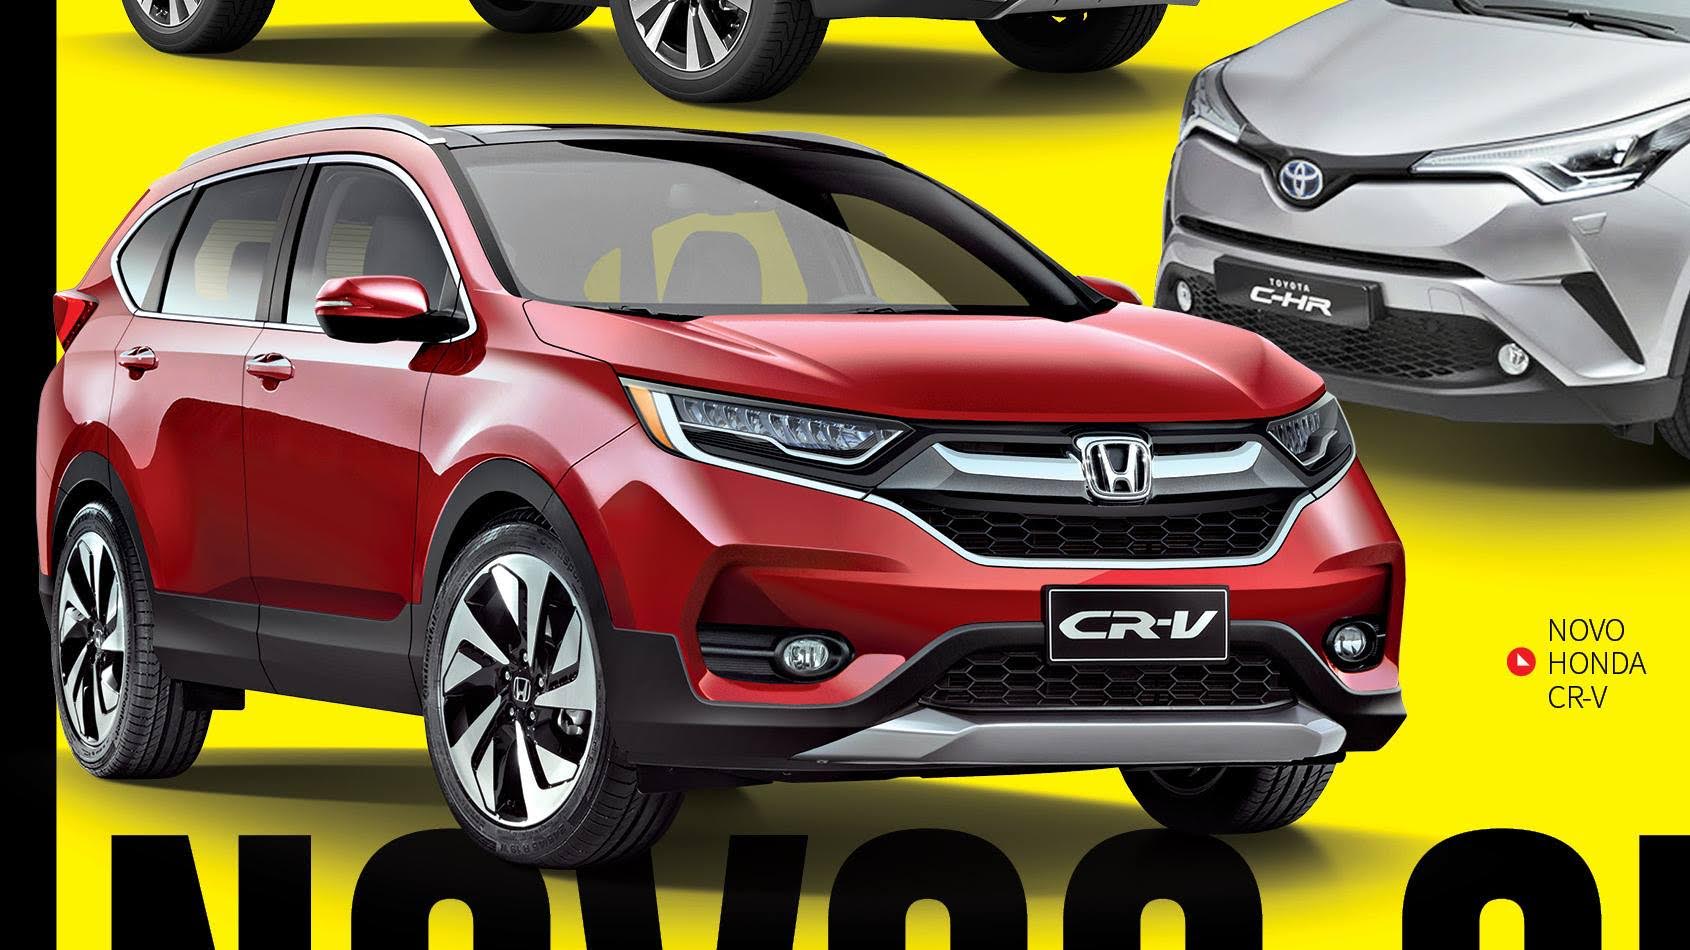 Berita, honda cr-v render: Prediksi Wujud Honda CR-V Generasi Kelima Muncul, Apa Opinimu?